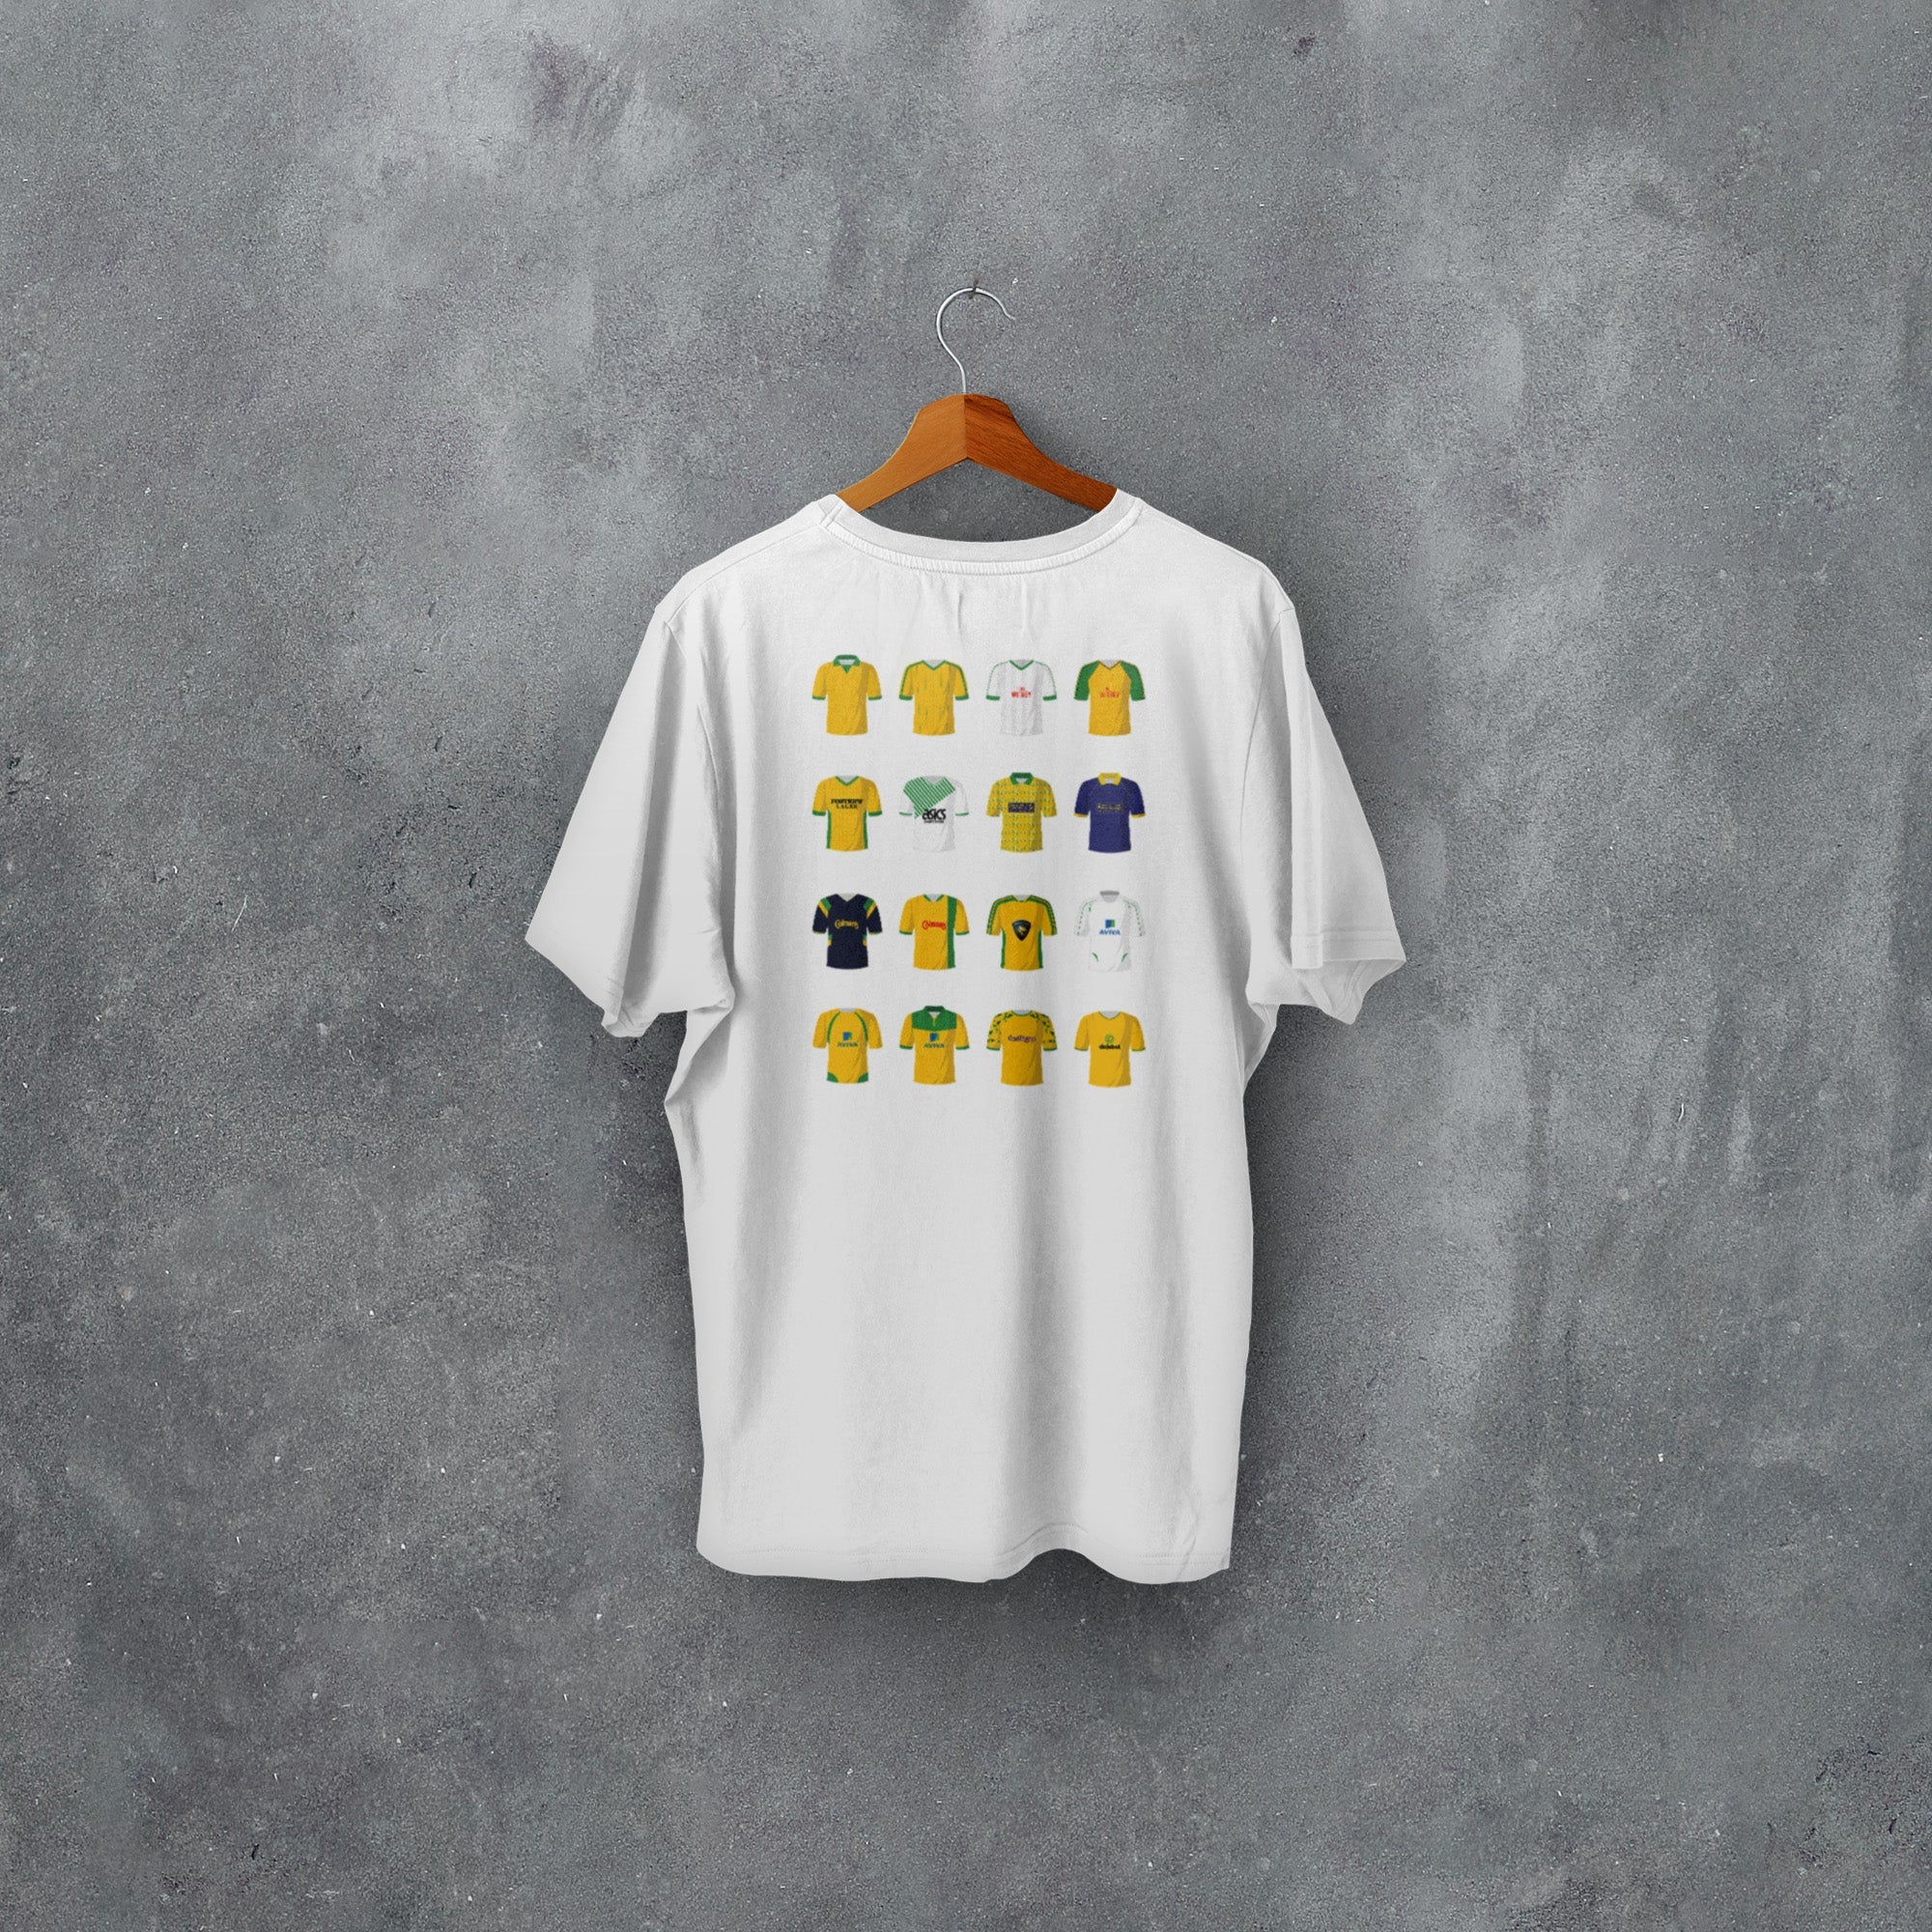 Norwich Classic Kits Football T-Shirt